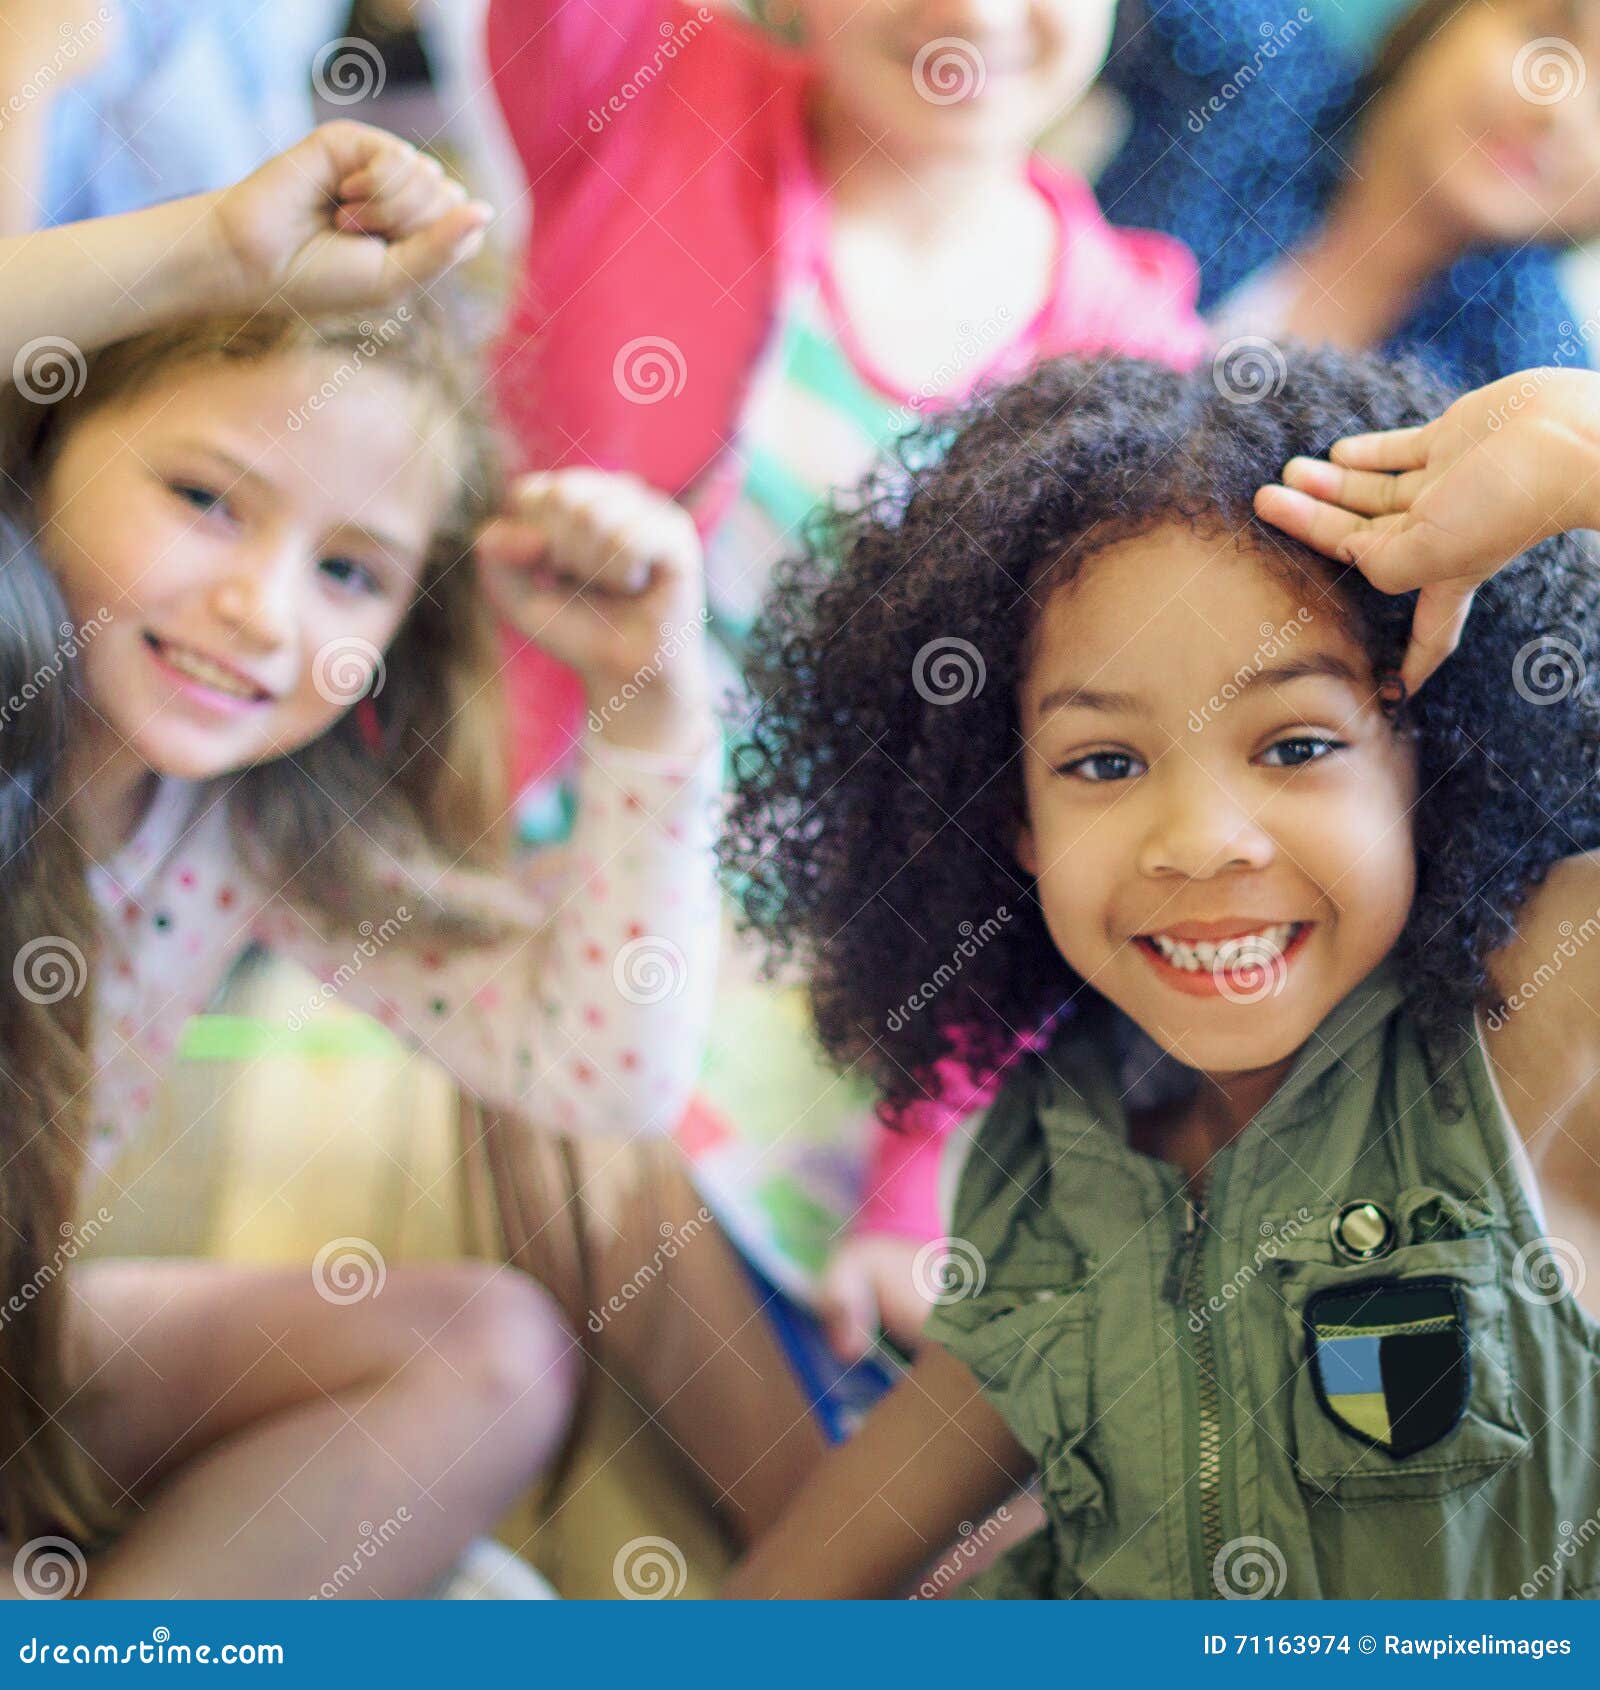 child companionship diversity ethnicity unity concept